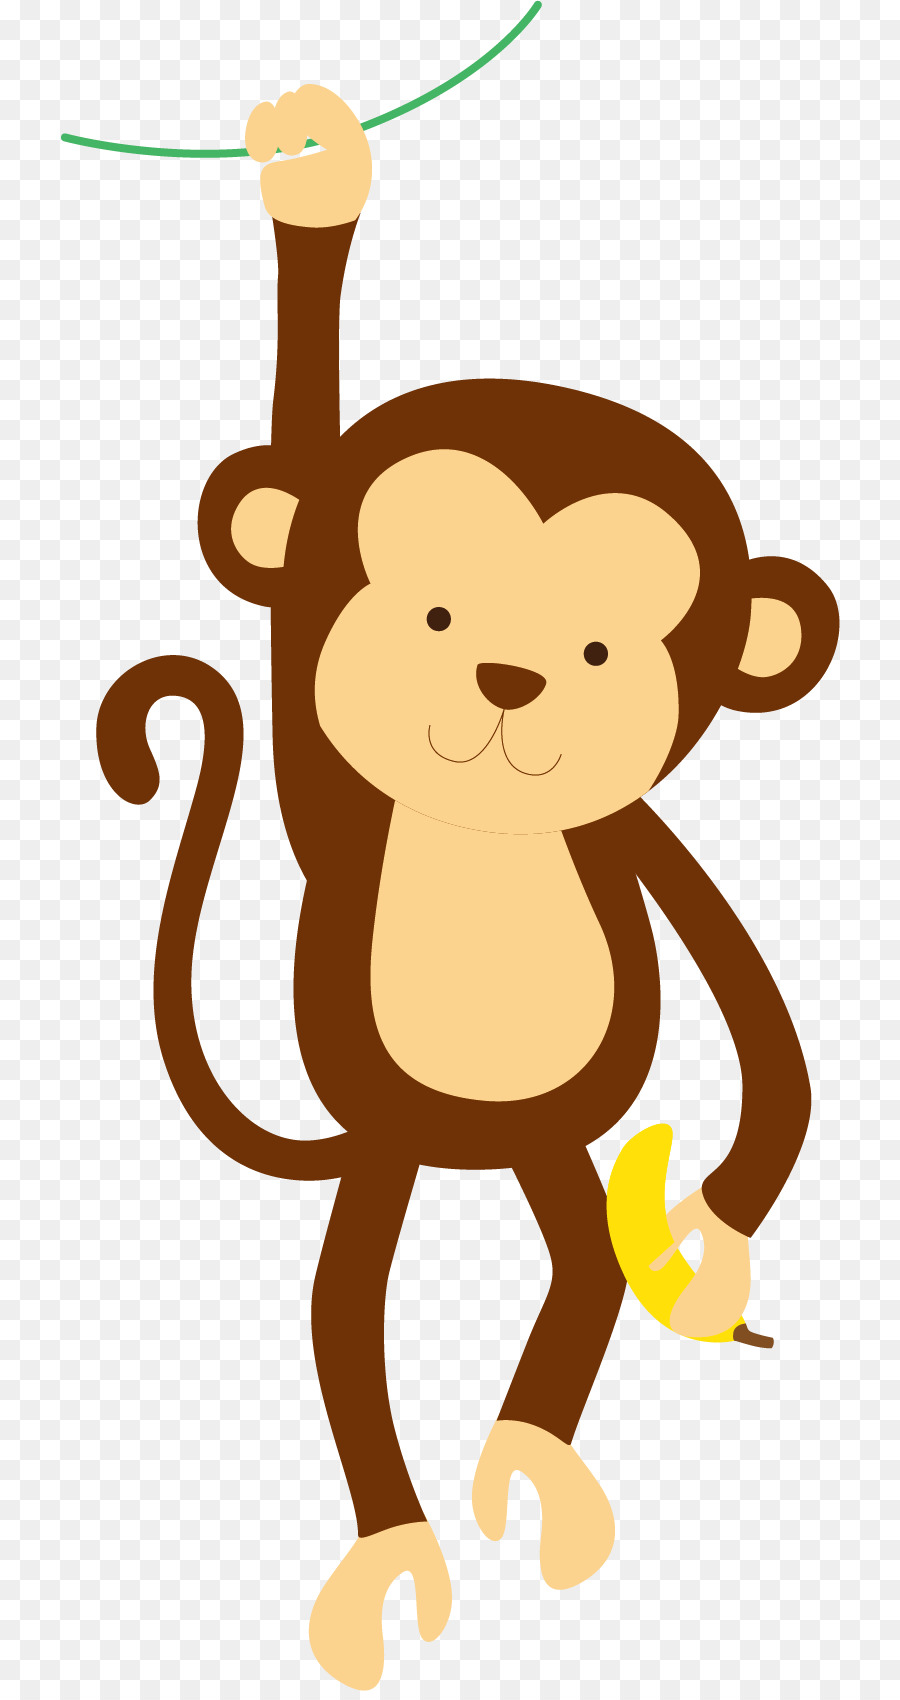 Giraffe Pony Monkey Cuteness - Take the monkey vector of banana png